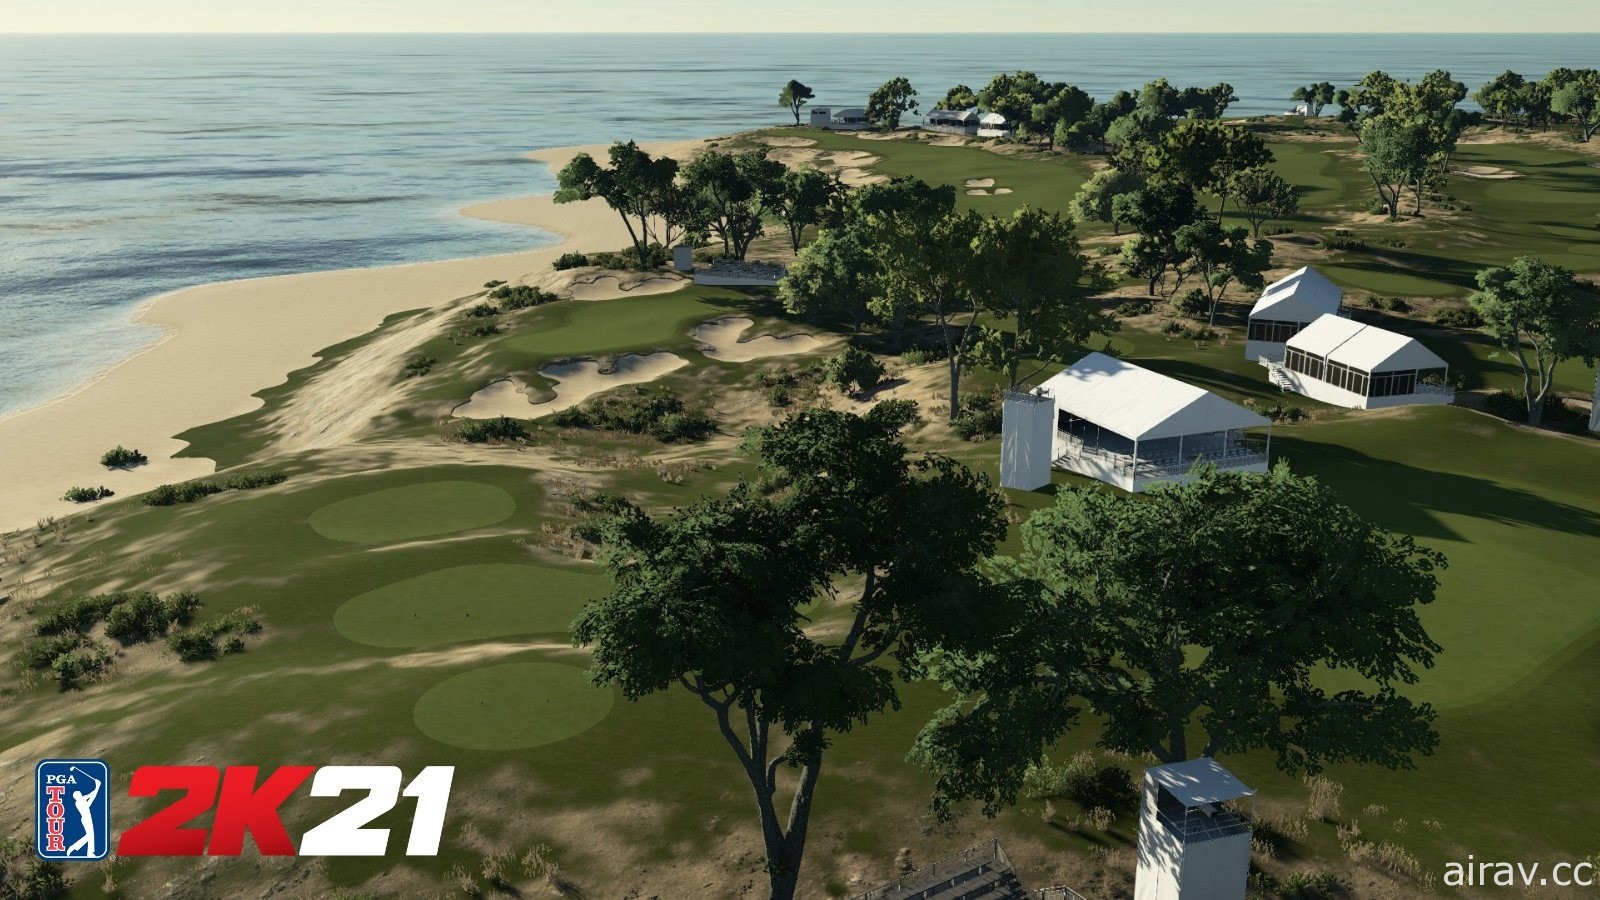 《PGA 巡迴賽 2K21》慶祝全球銷量突破 250 萬套 推出全新創作內容並與 100 Thieves 合作